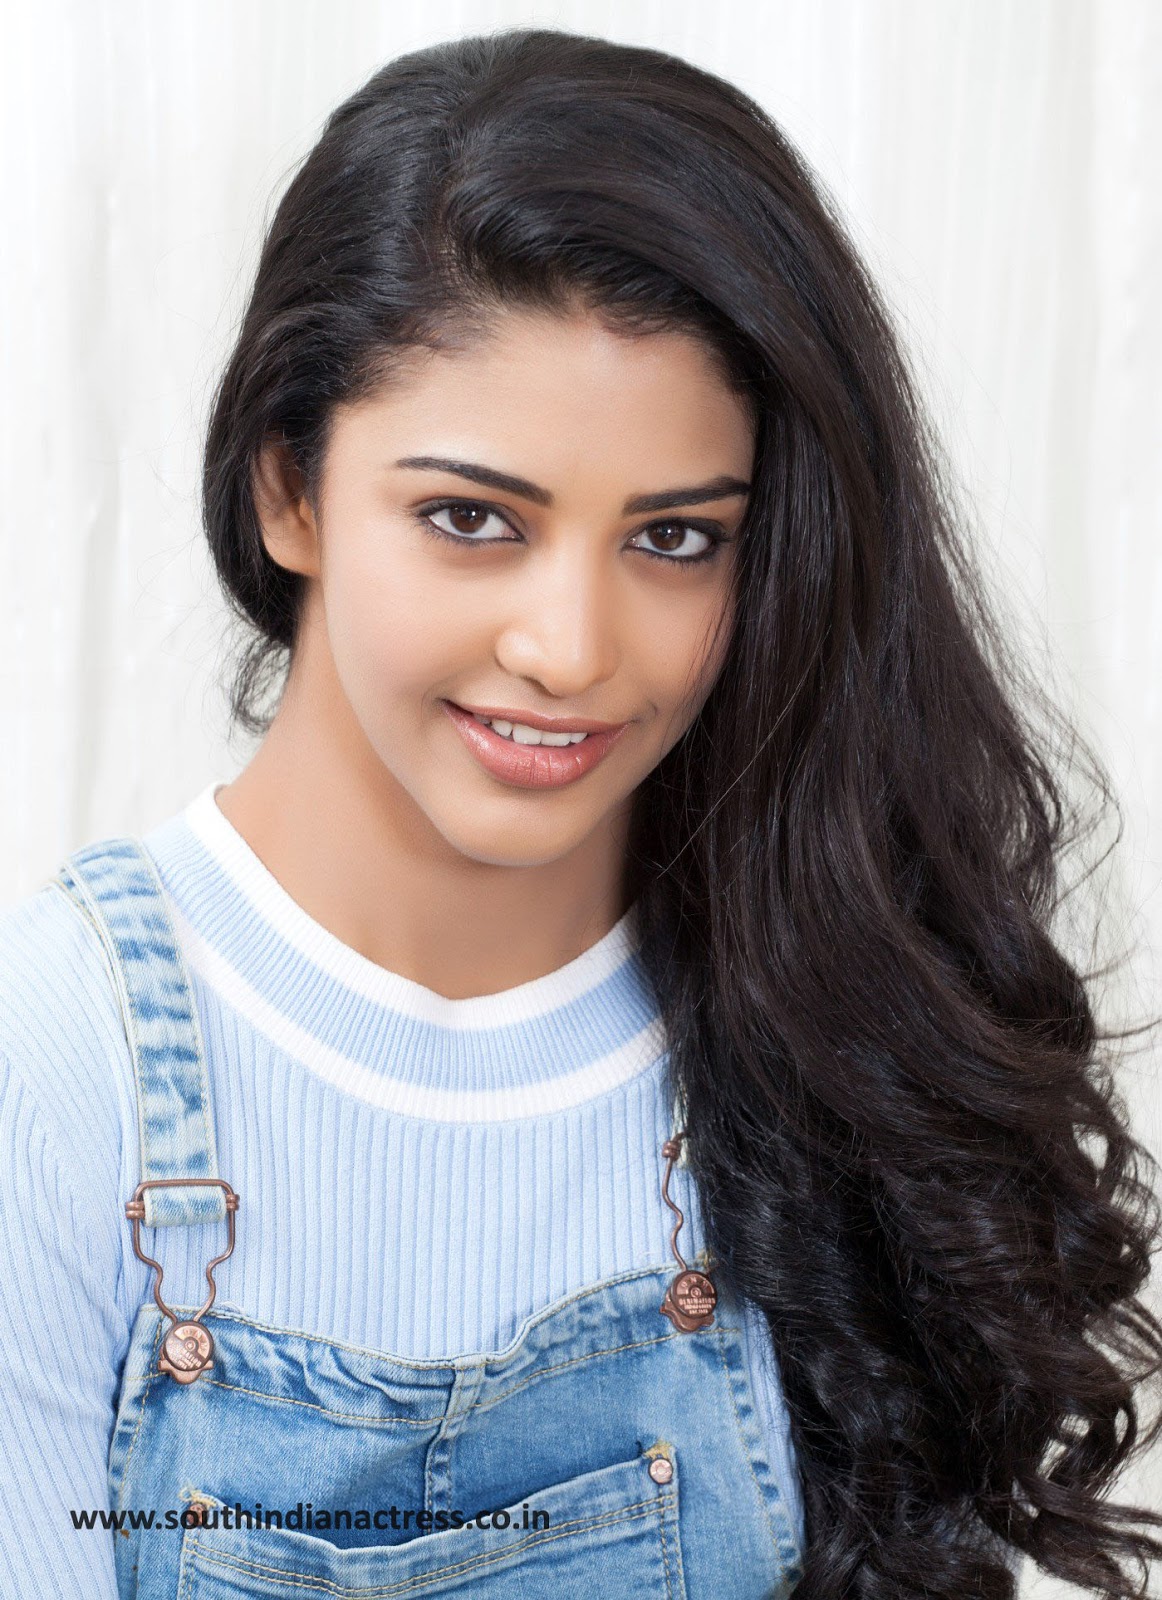 Daksha Nagarkar Photo Shoot In Jeans South Indian Actress